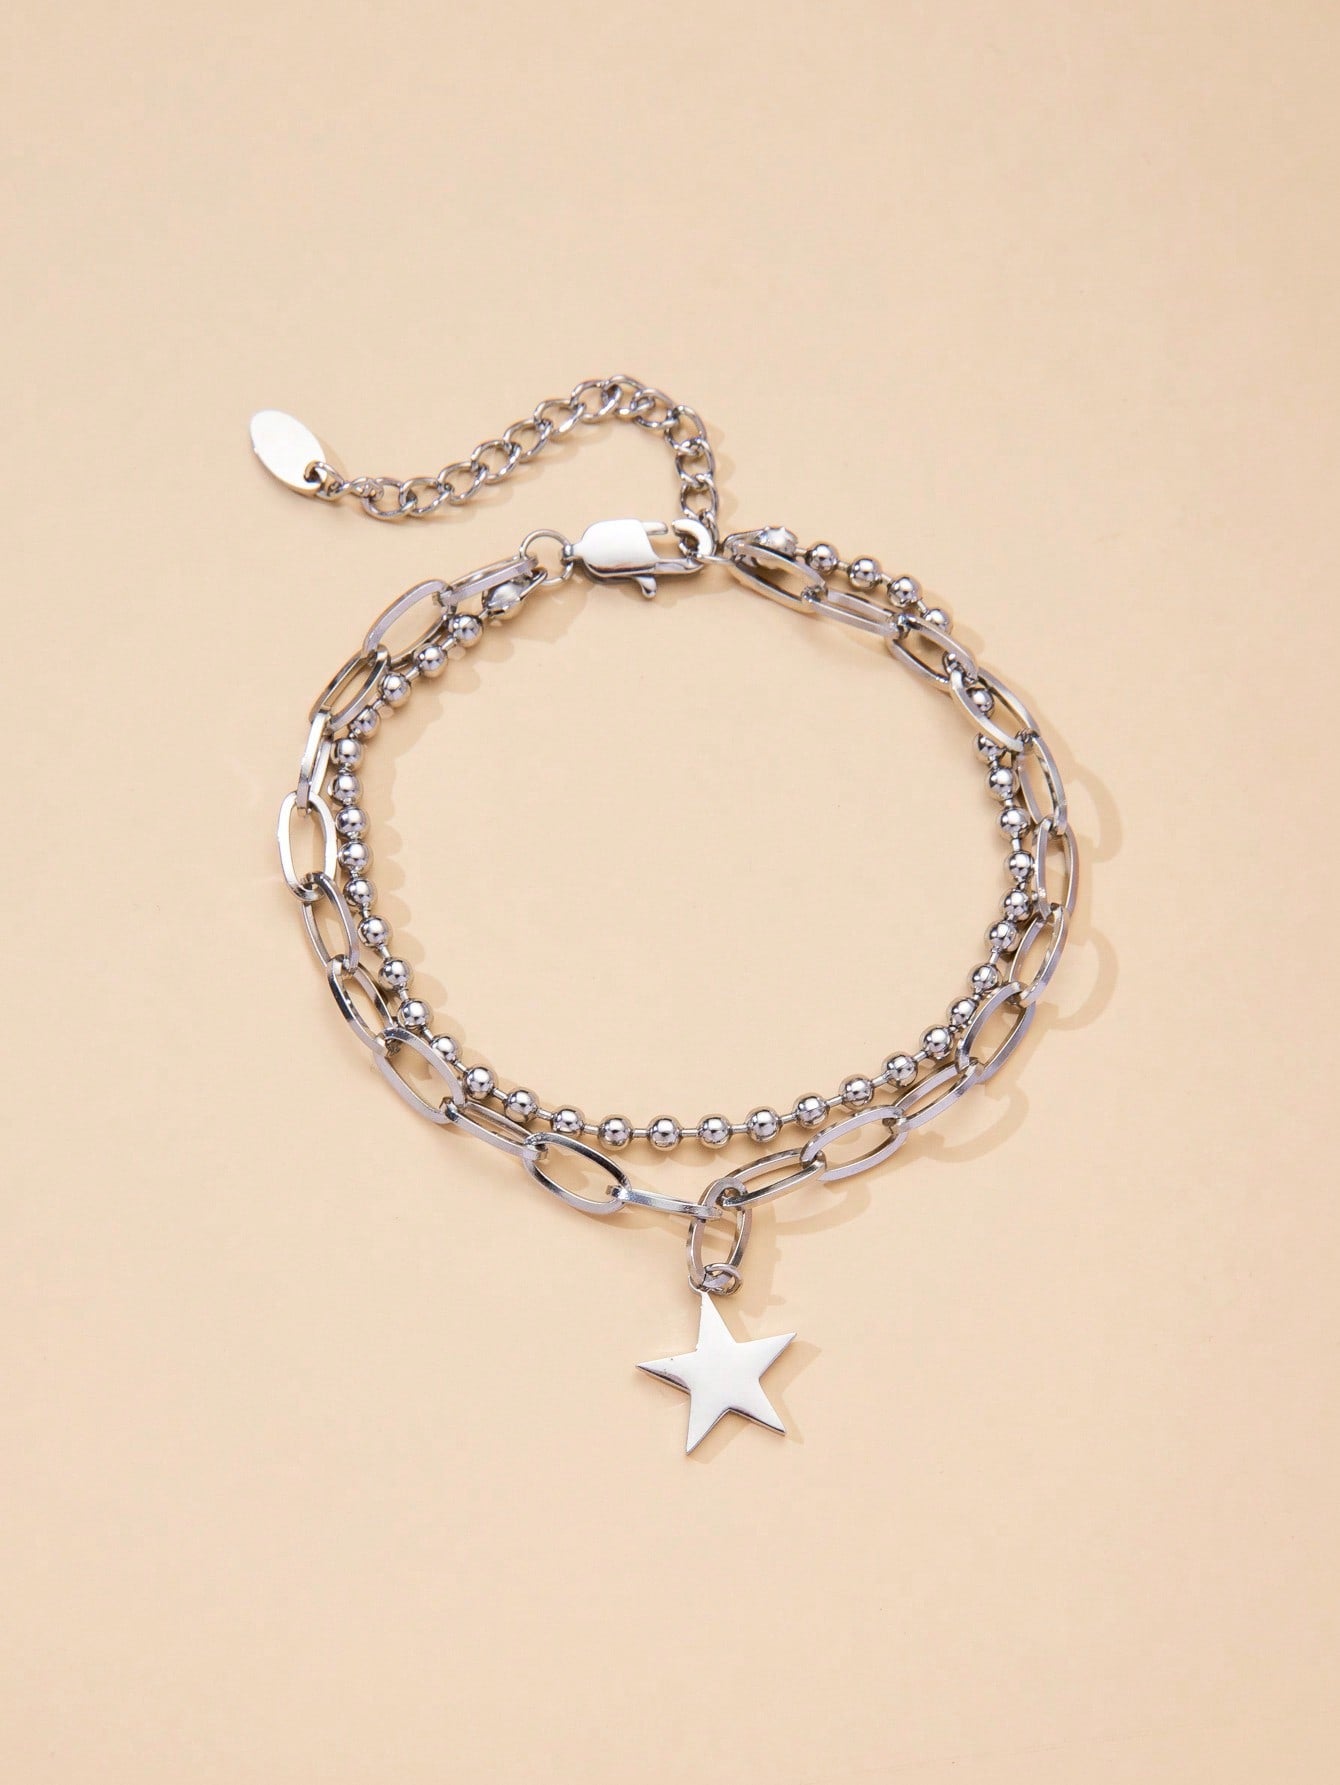 1pc Star Charm Decoration Stainless Steel Chain Bracelet For Girlfriend Birthday Gift